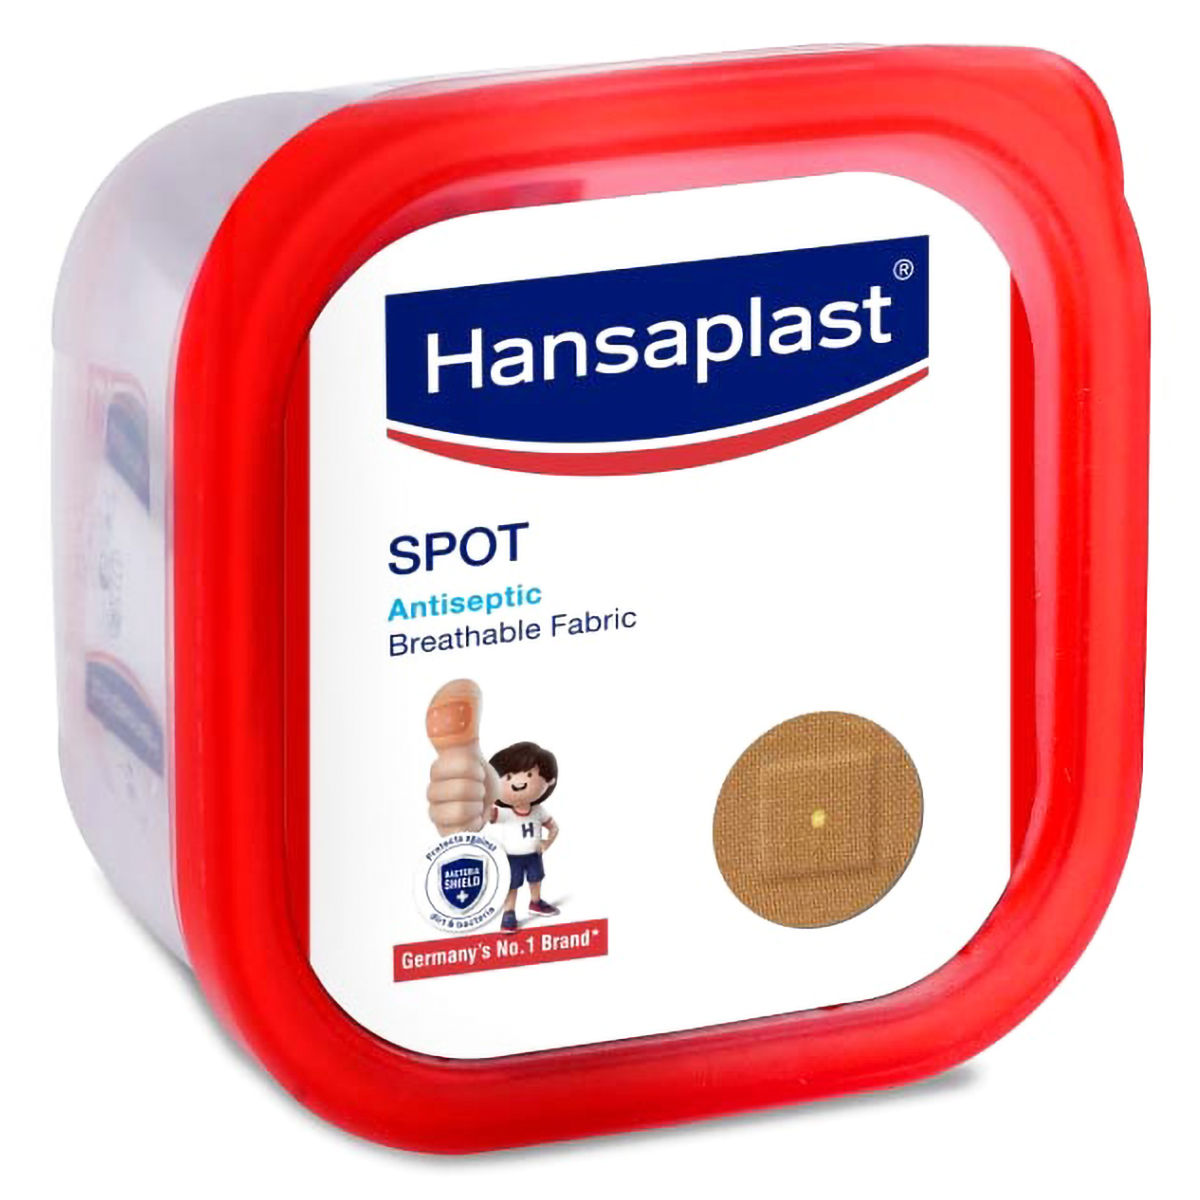 Buy Hansaplast Breathable Fabric Spot Bandage, 10 Count Online